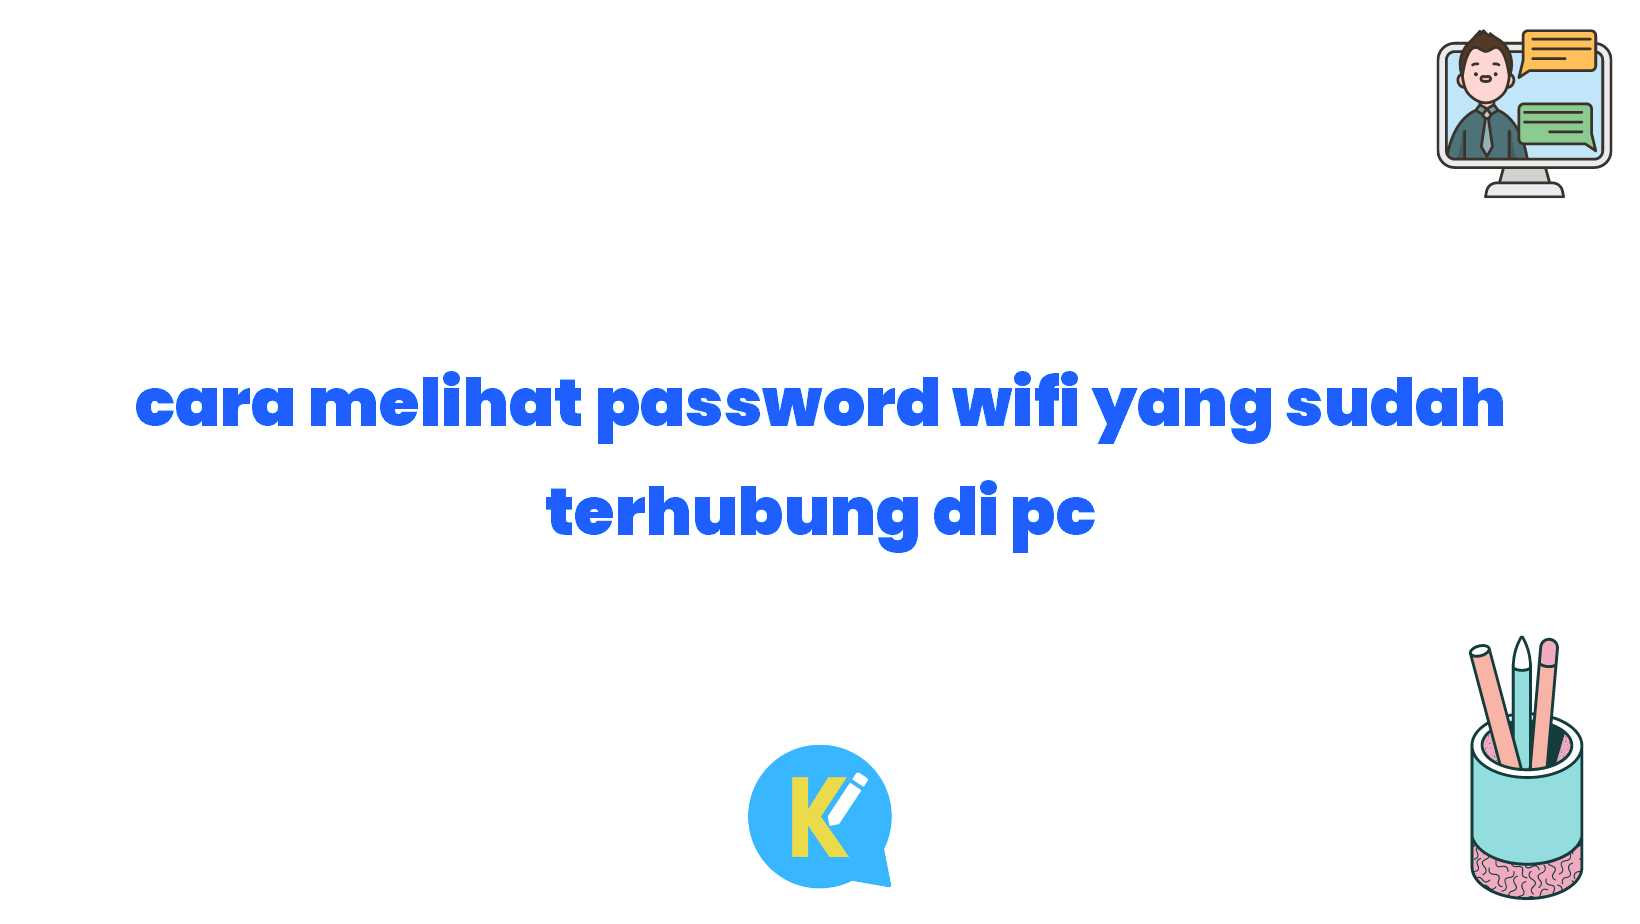 cara melihat password wifi yang sudah terhubung di pc